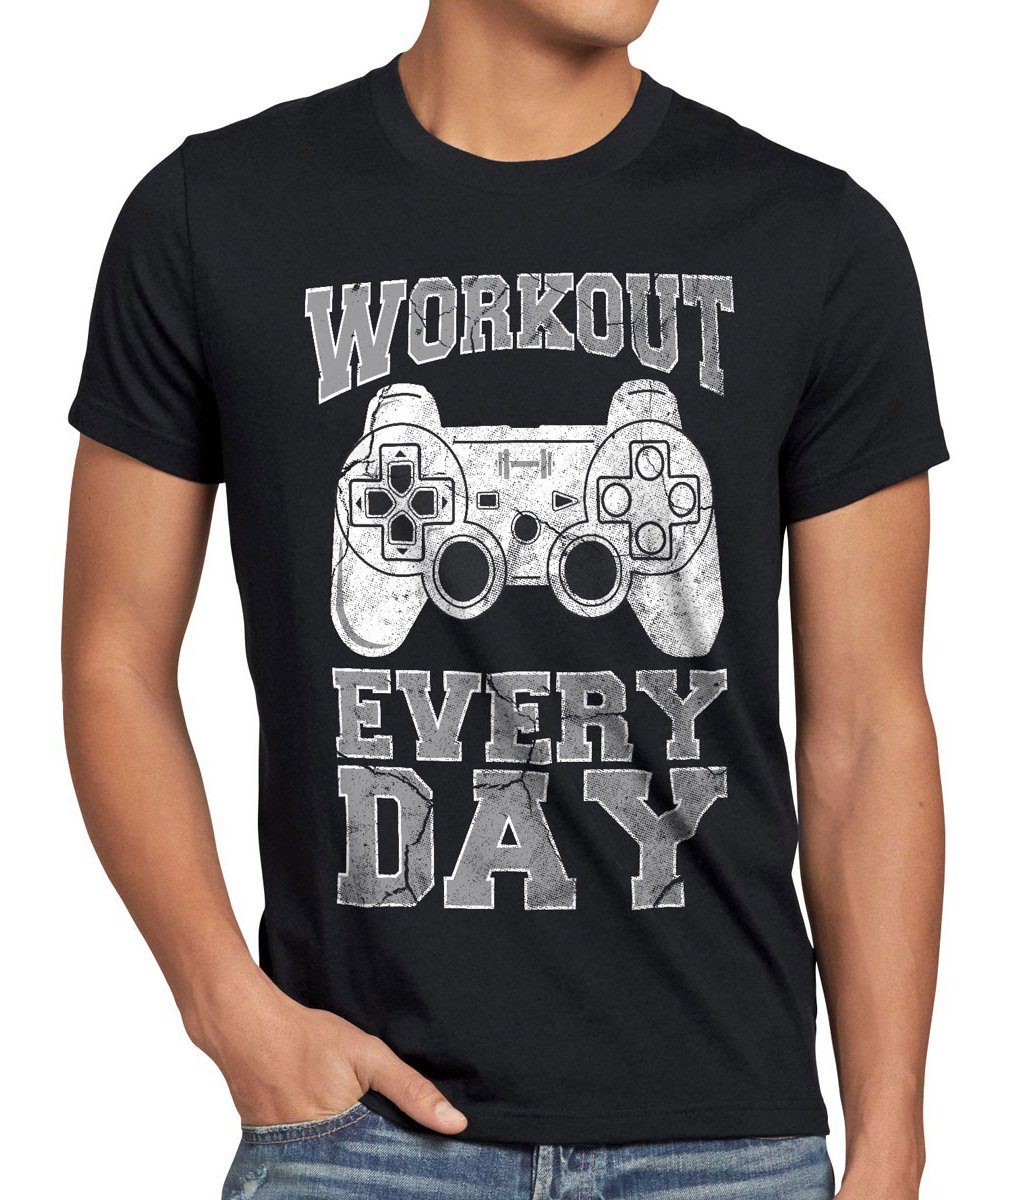 style3 Print-Shirt Herren T-Shirt Workout Gamer play sport station kontroller konsole gym game fun schwarz